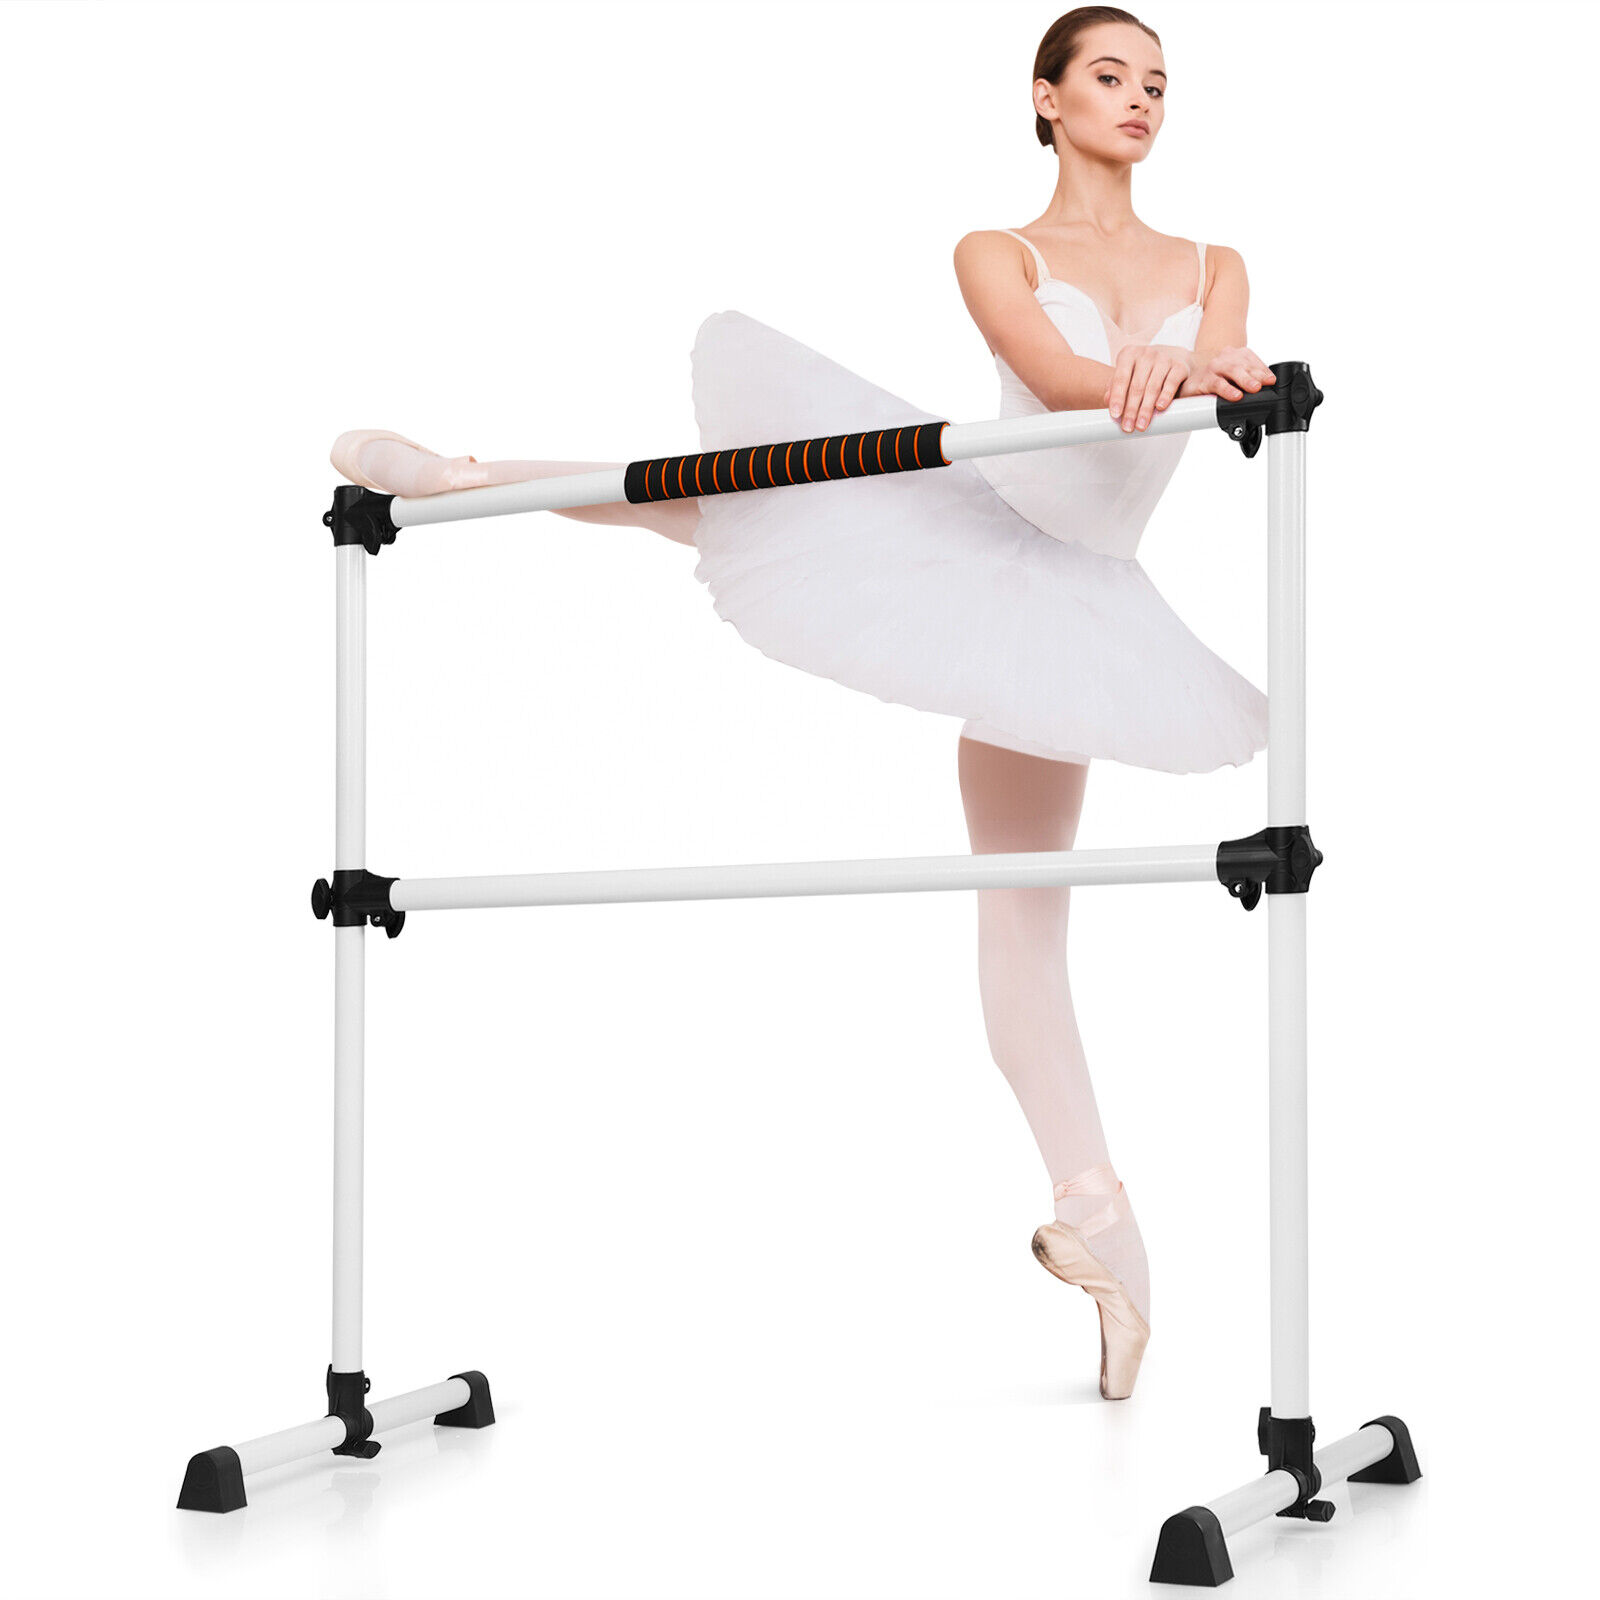 Goplus Portable Freestanding Ballet Barre 4ft Double Dance Stretching Bar